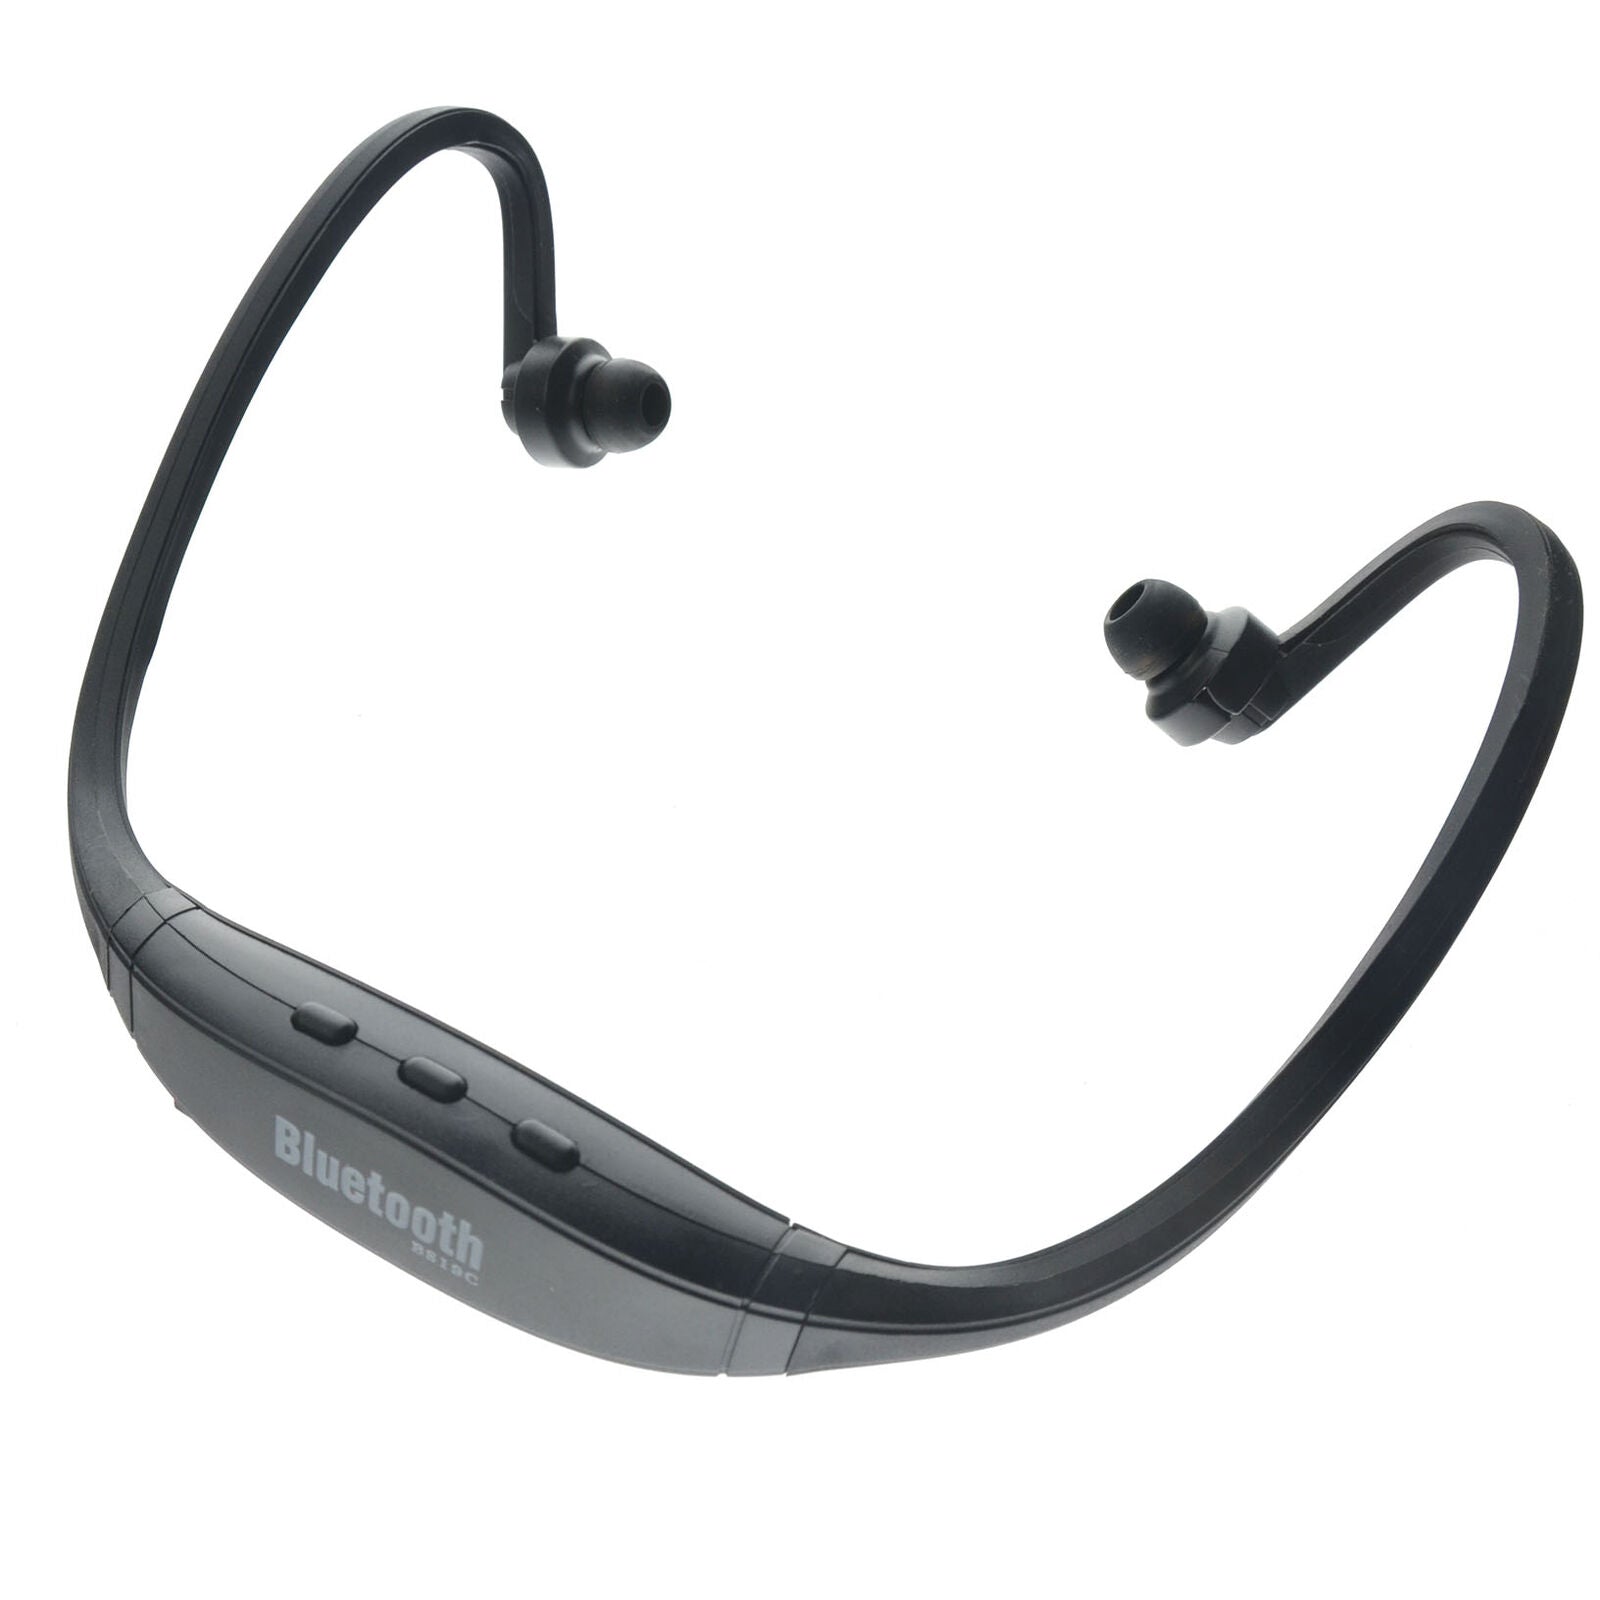 New Sport Wireless Headset Headphones Music MP3 Player TF Card FM Radio